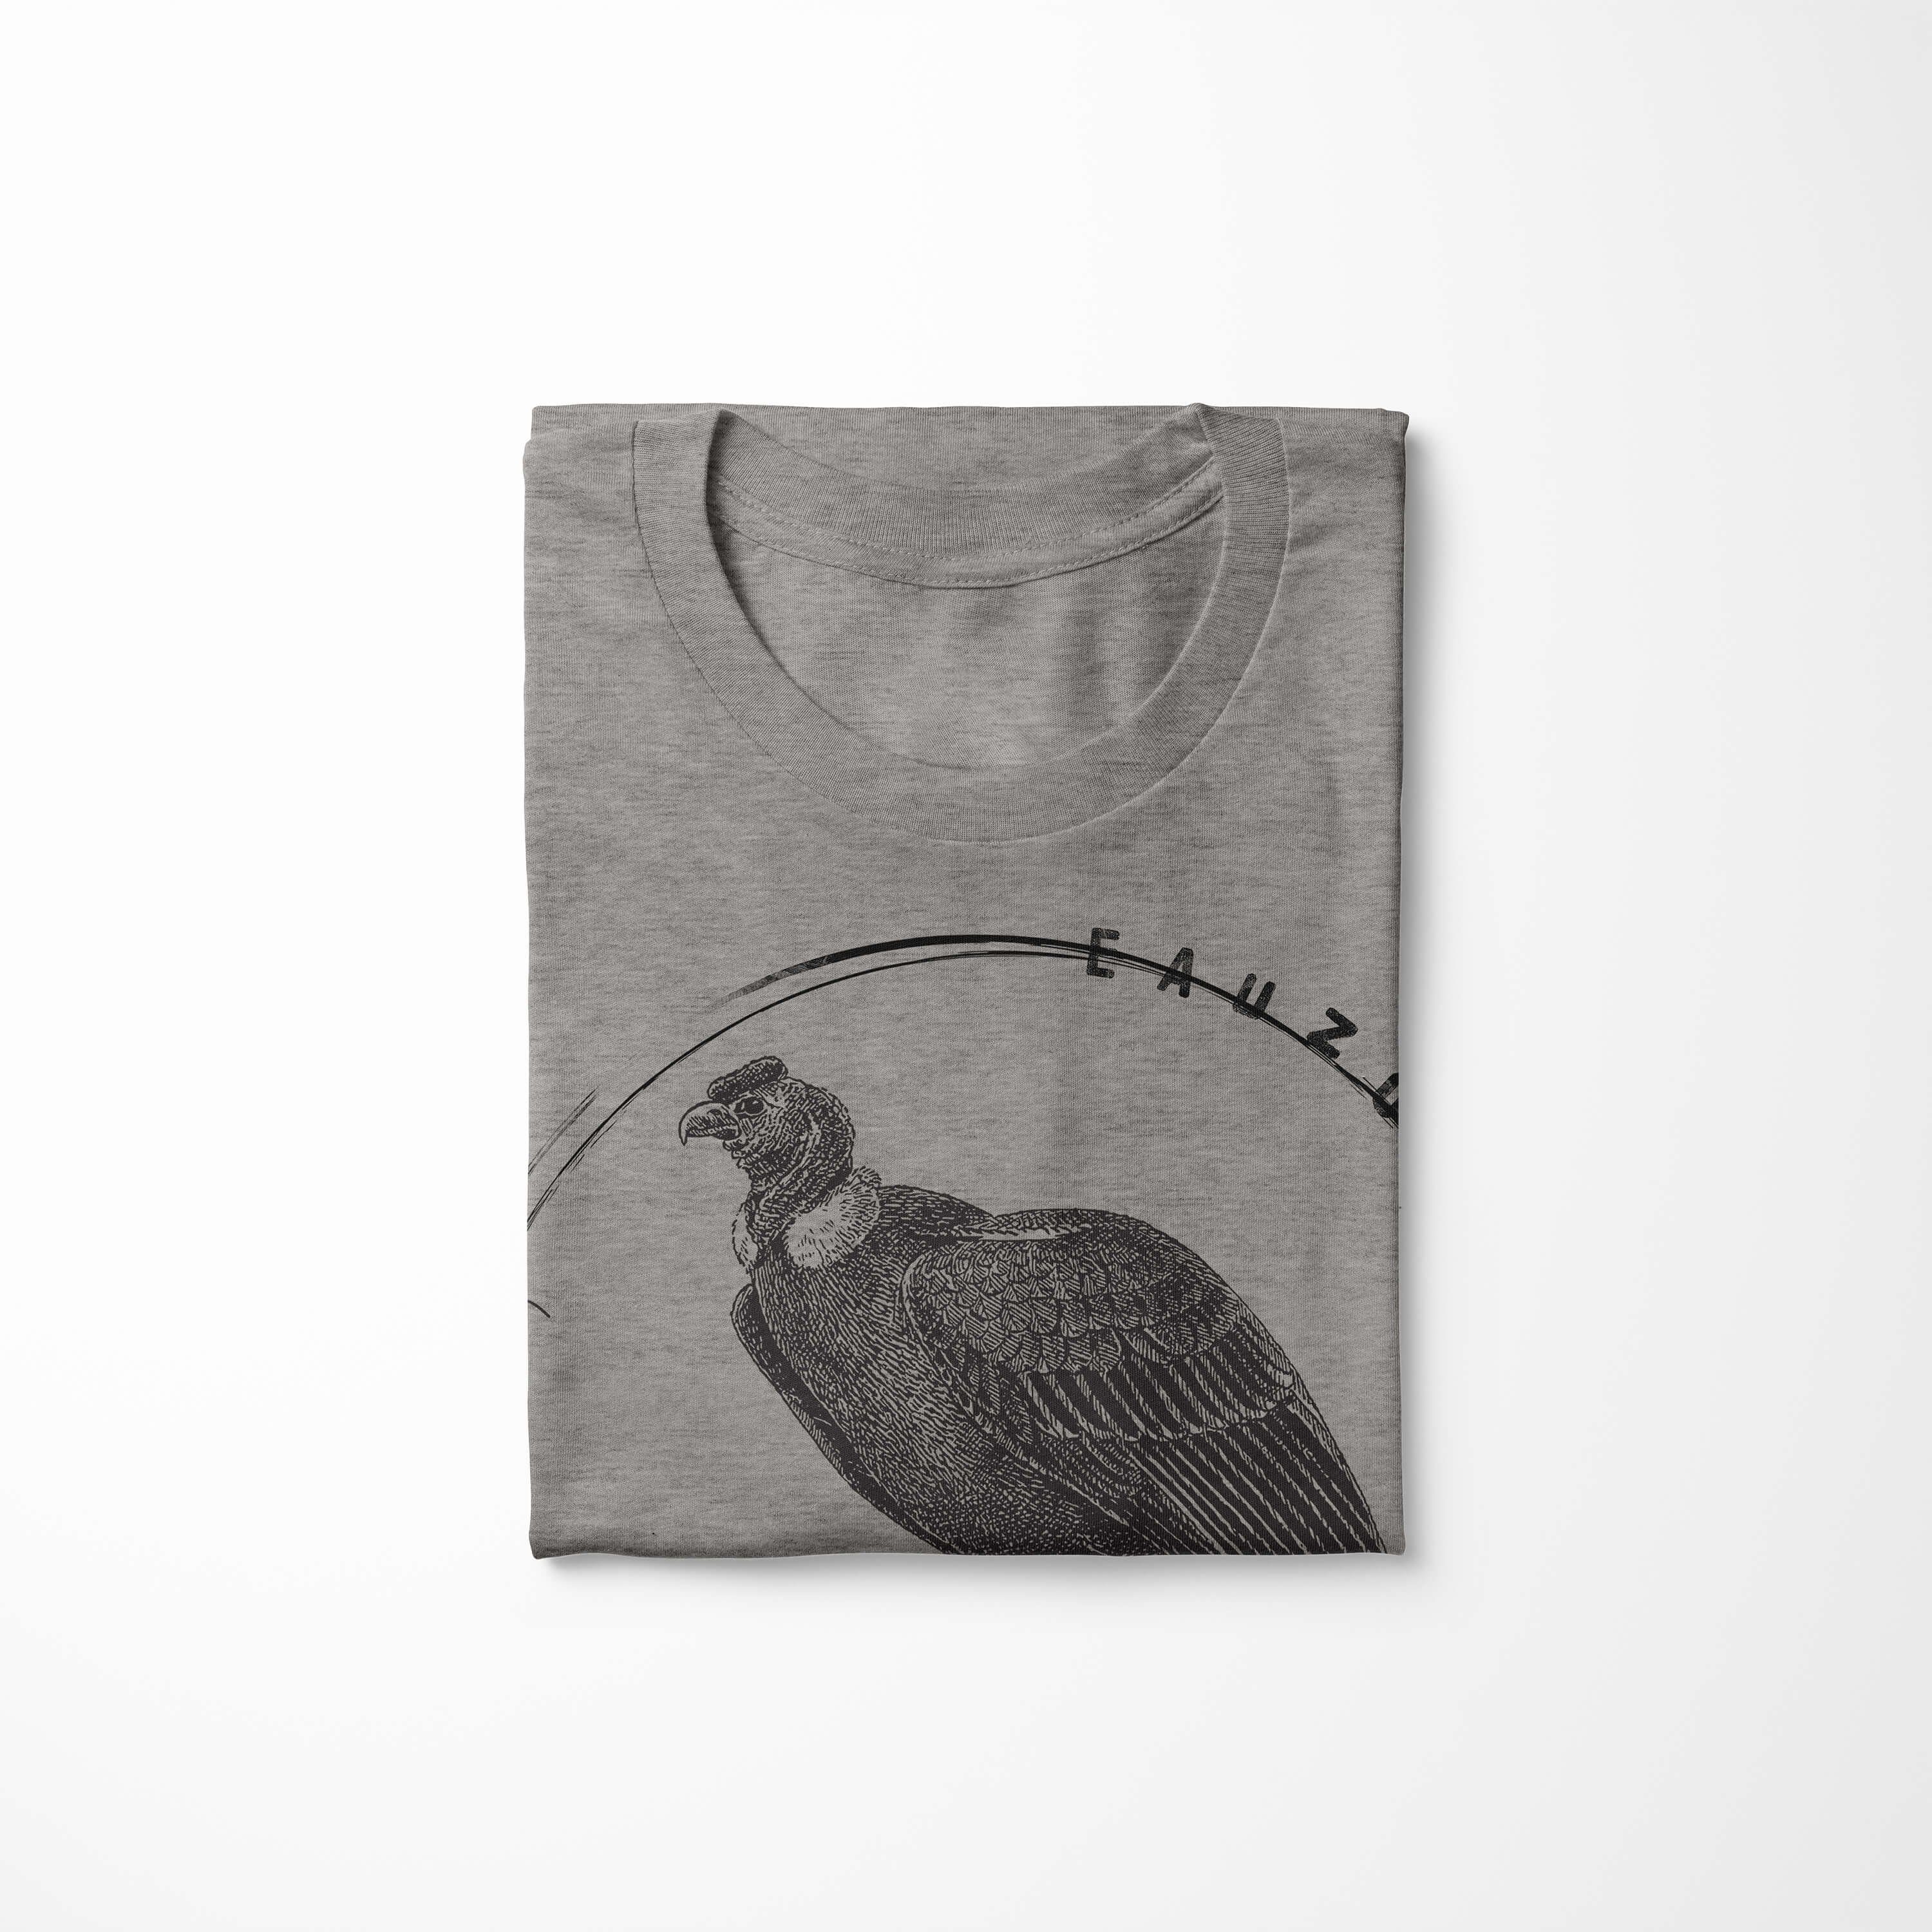 Ash Evolution Condor Sinus Art T-Shirt Herren T-Shirt